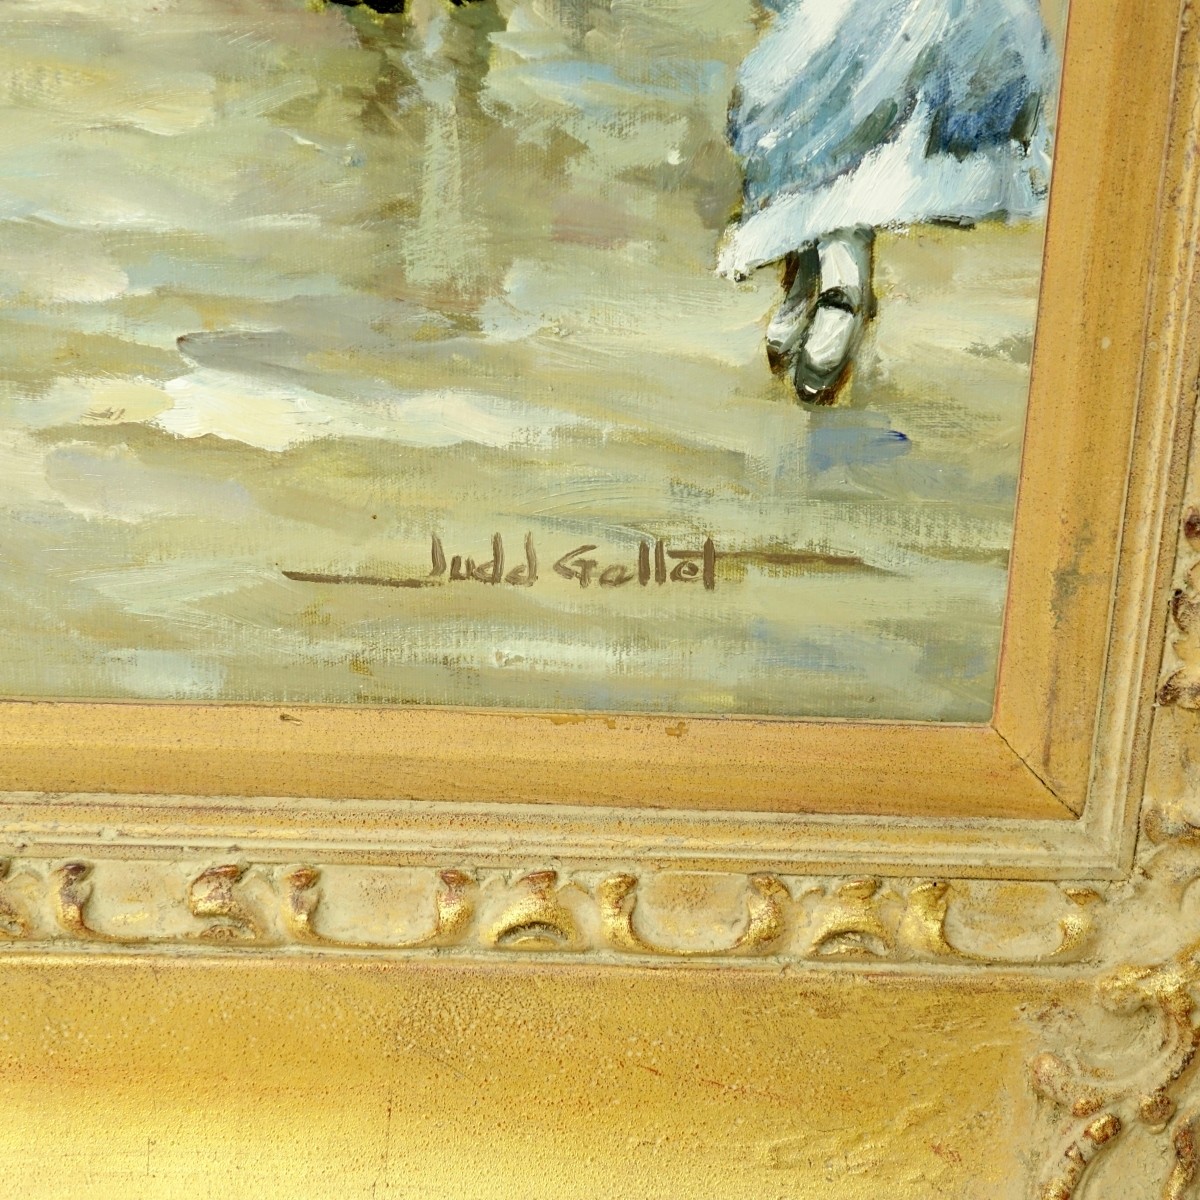 Judd Gallet (20th century) Oil on Canvas